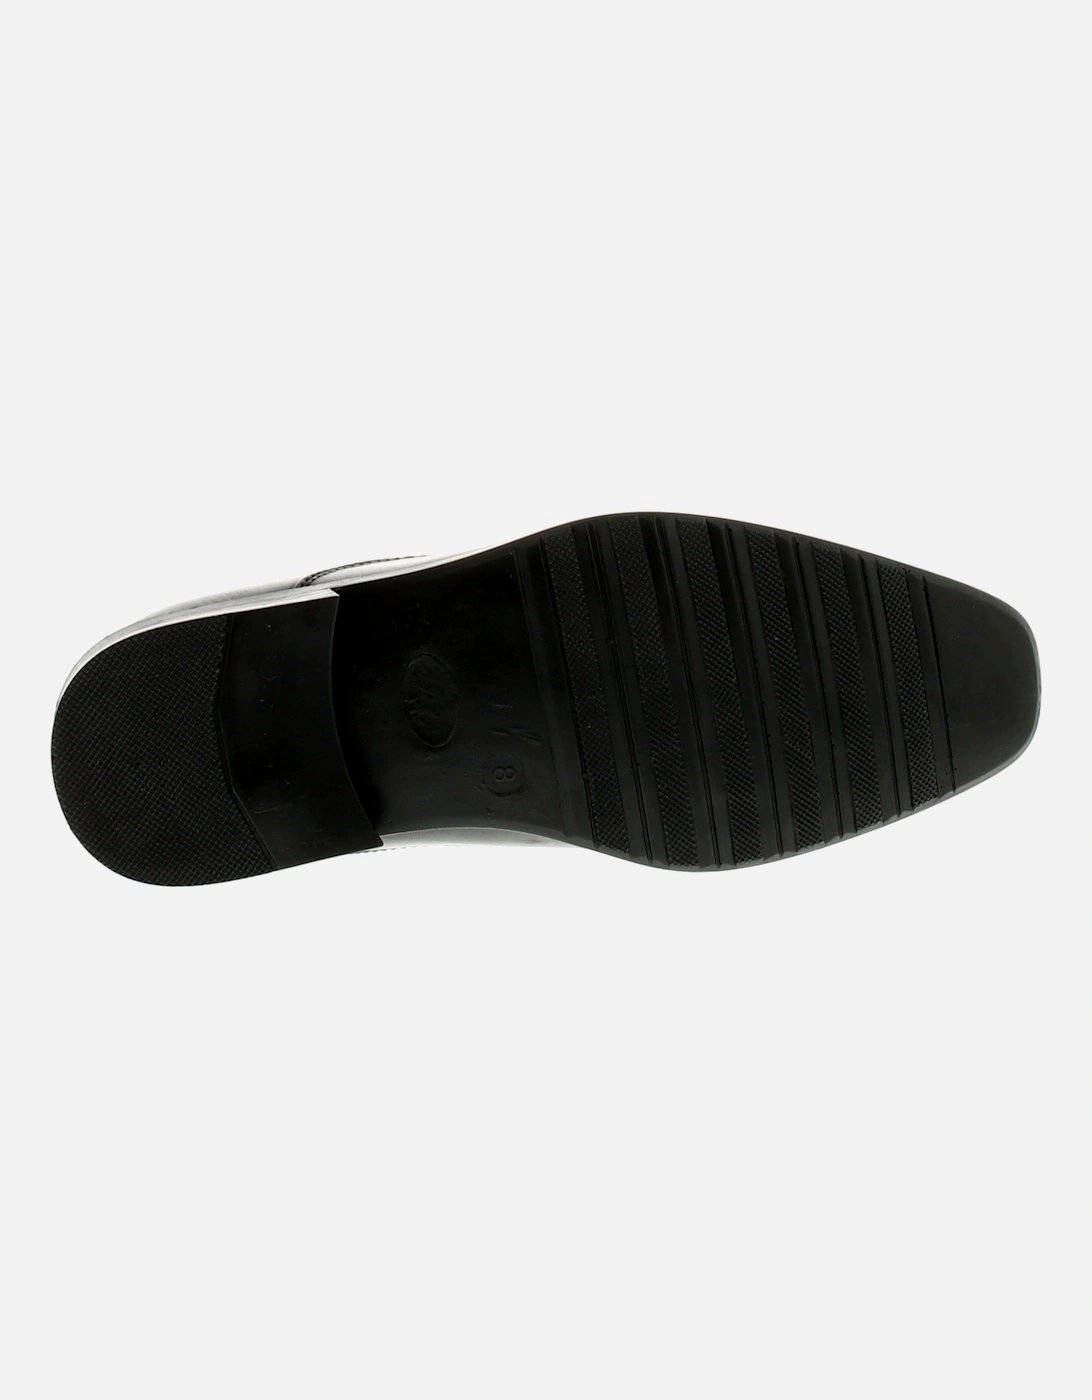 Mens Shoes Work School Formal Brenner Slip On black UK Size